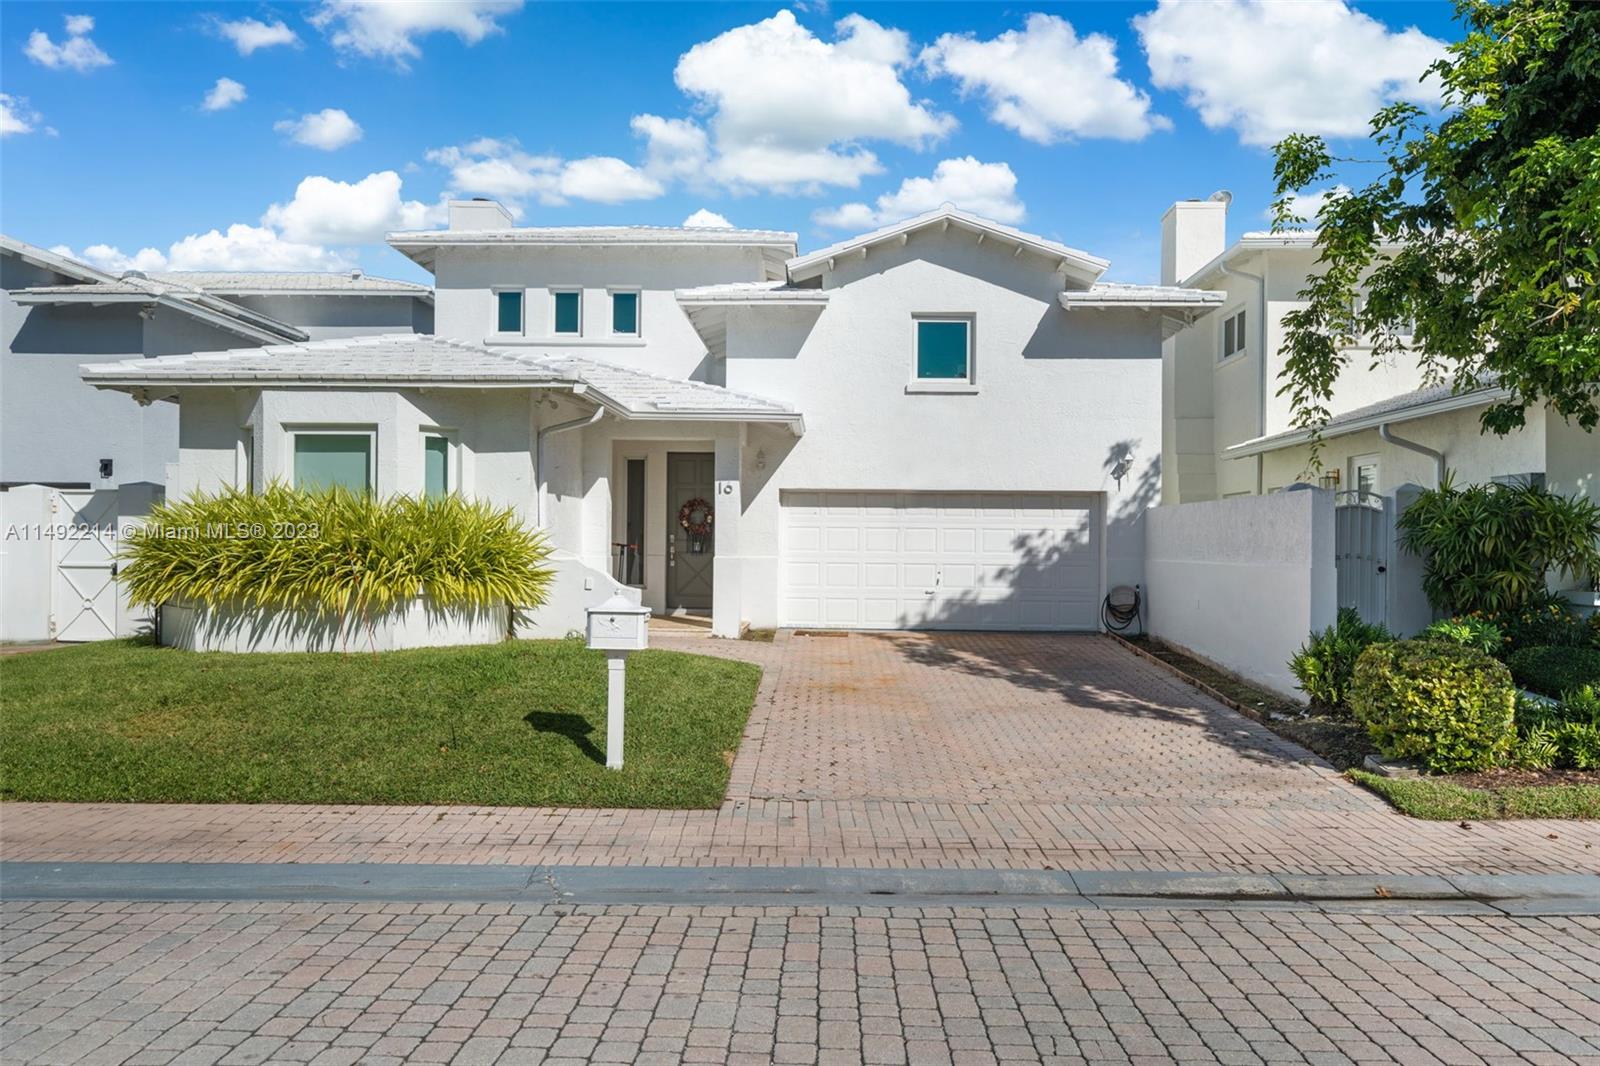 Rental Property at 16 Turtle Walk, Key Biscayne, Miami-Dade County, Florida - Bedrooms: 5 
Bathrooms: 6  - $30,000 MO.